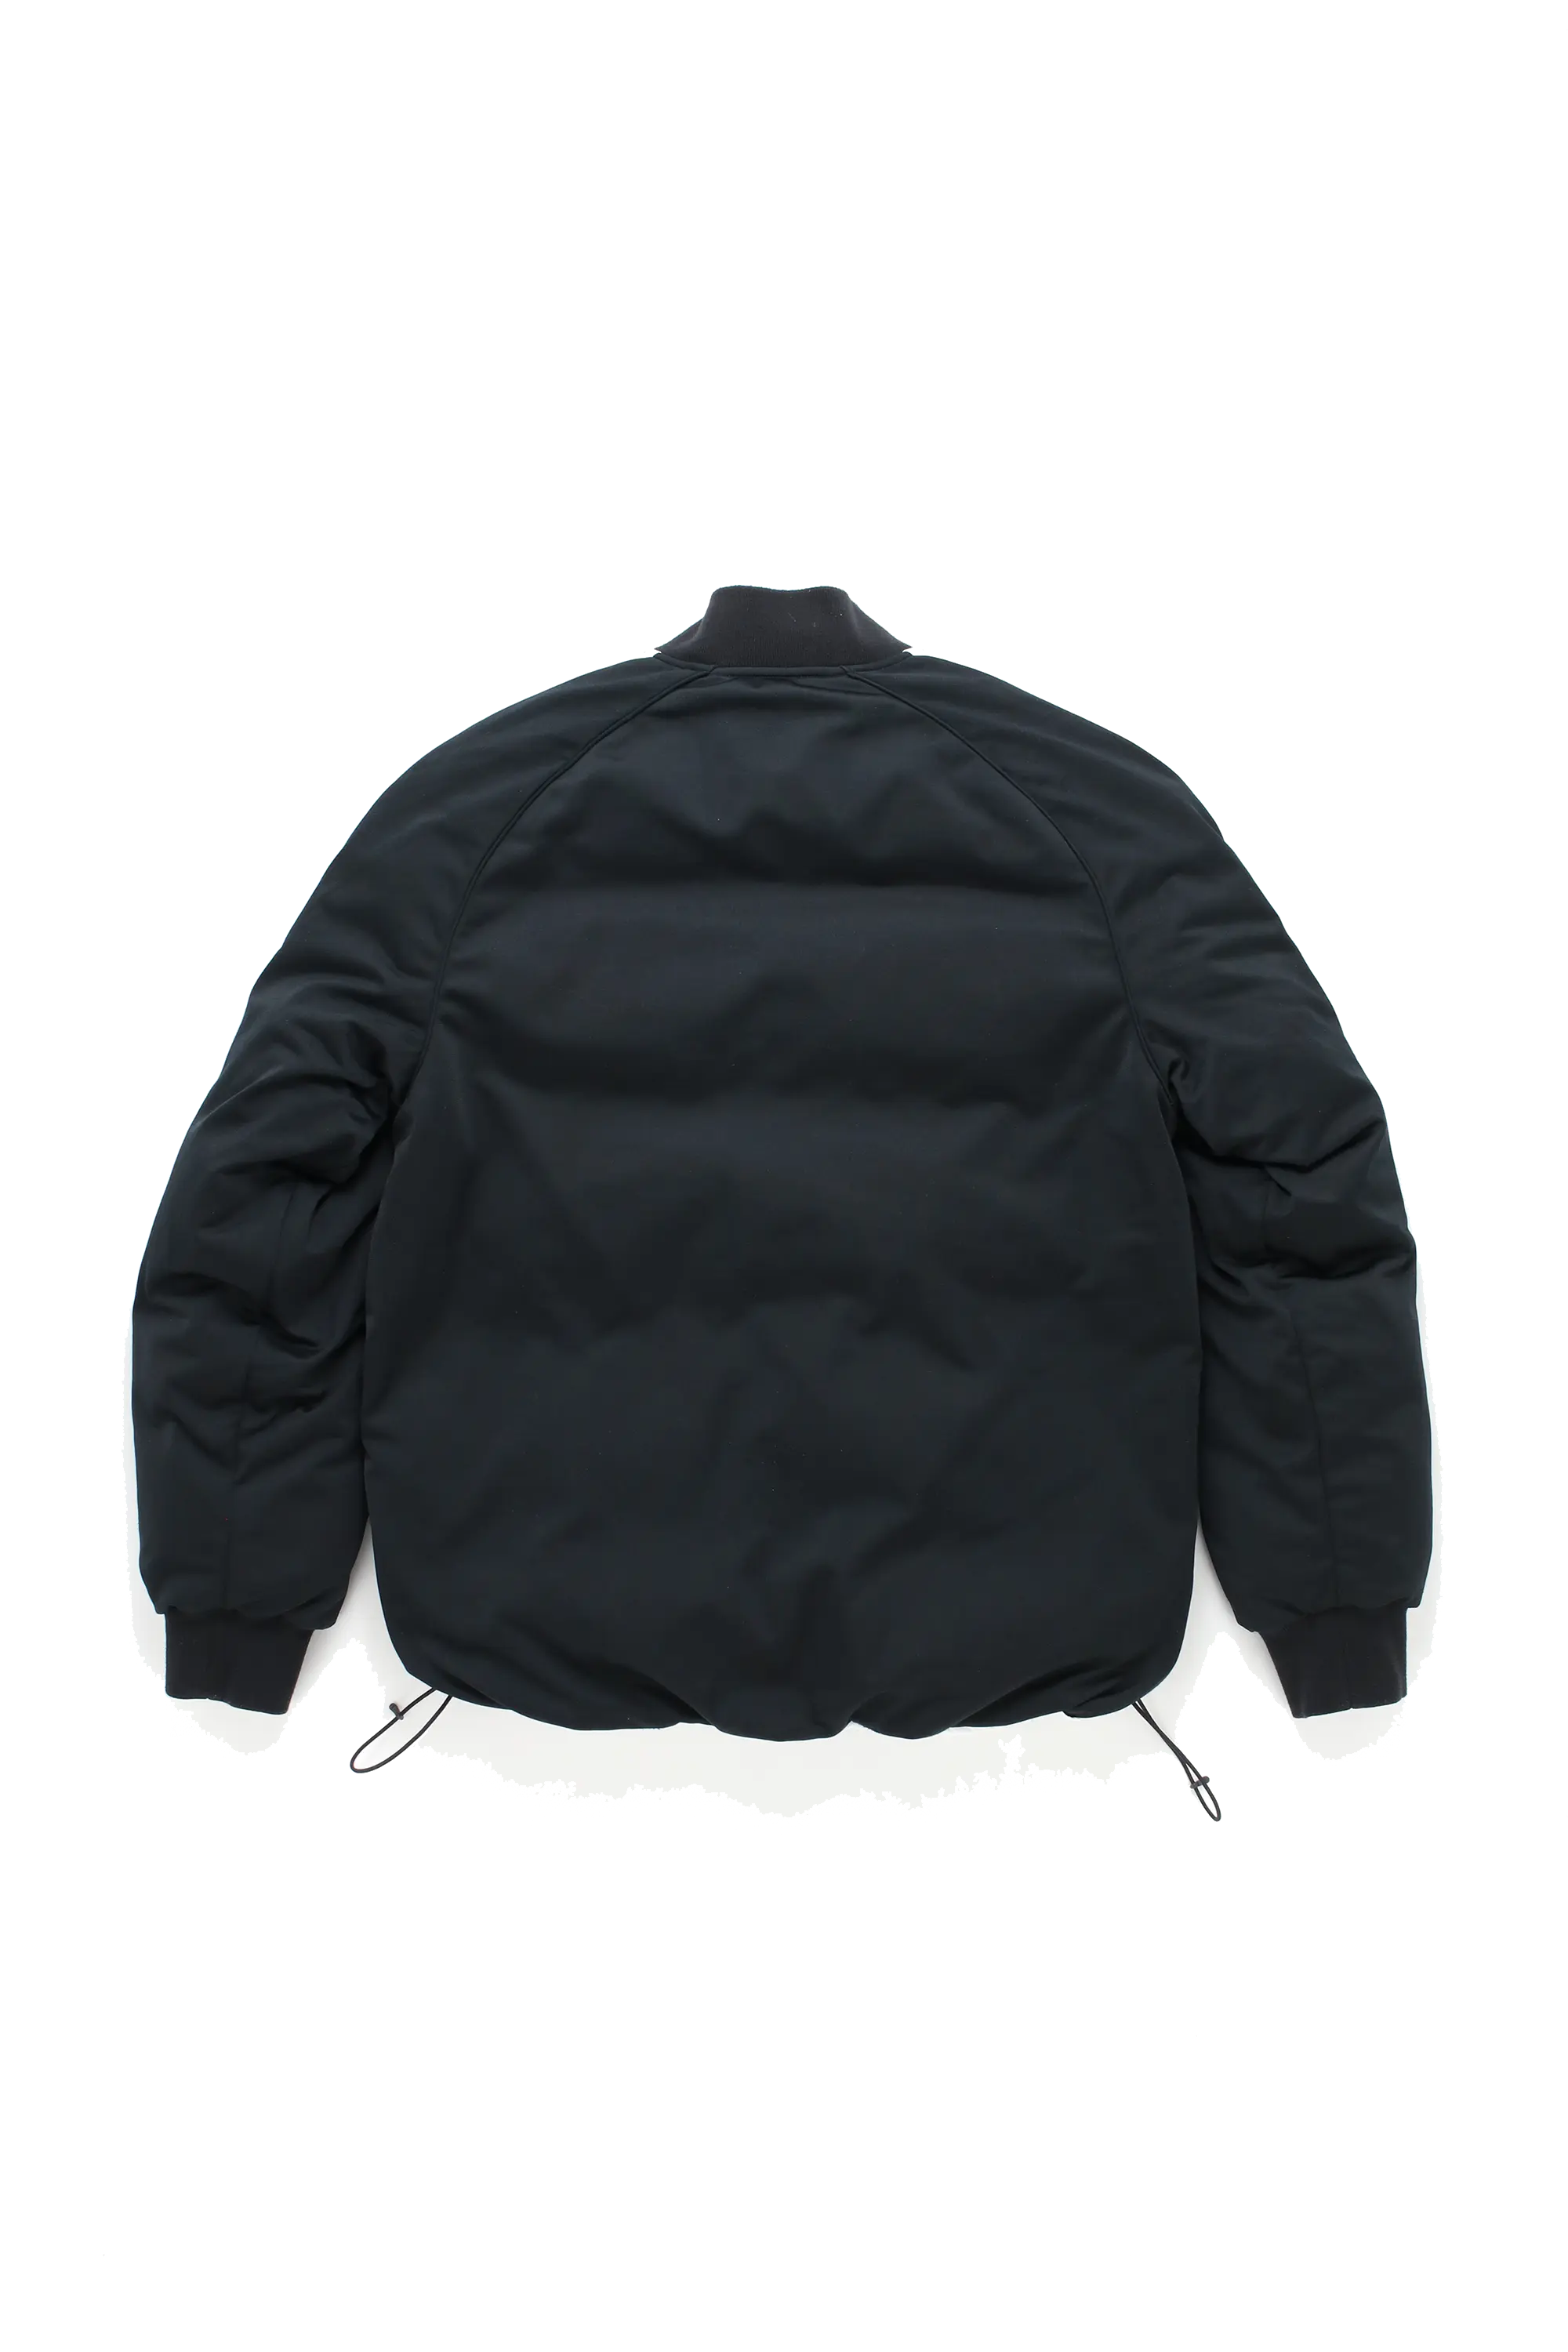 Adidas Reversible Sample Jacket